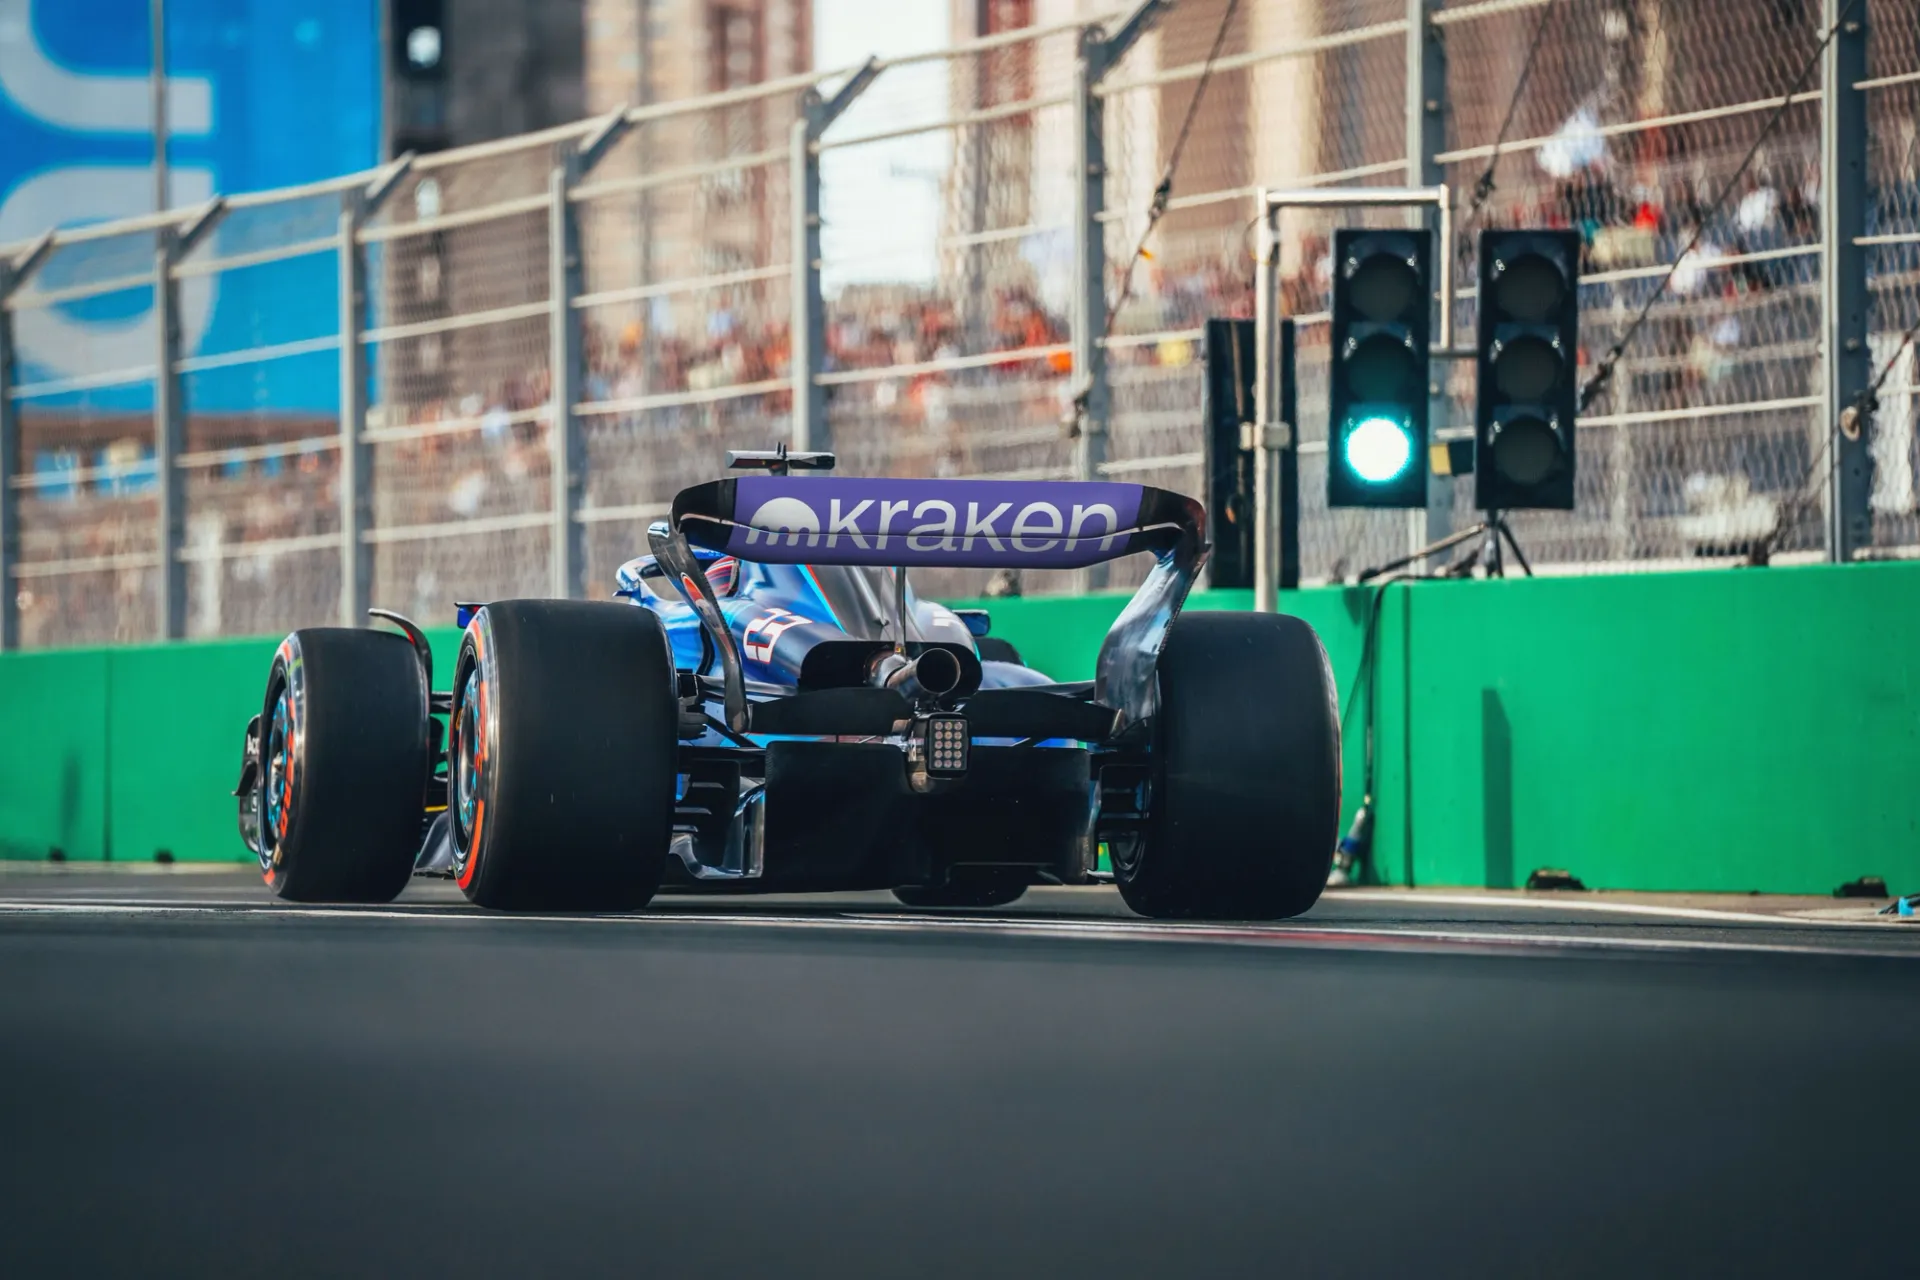 Kraken gives fans chance to put NFT on an F1 racecar at Austin Grand Prix